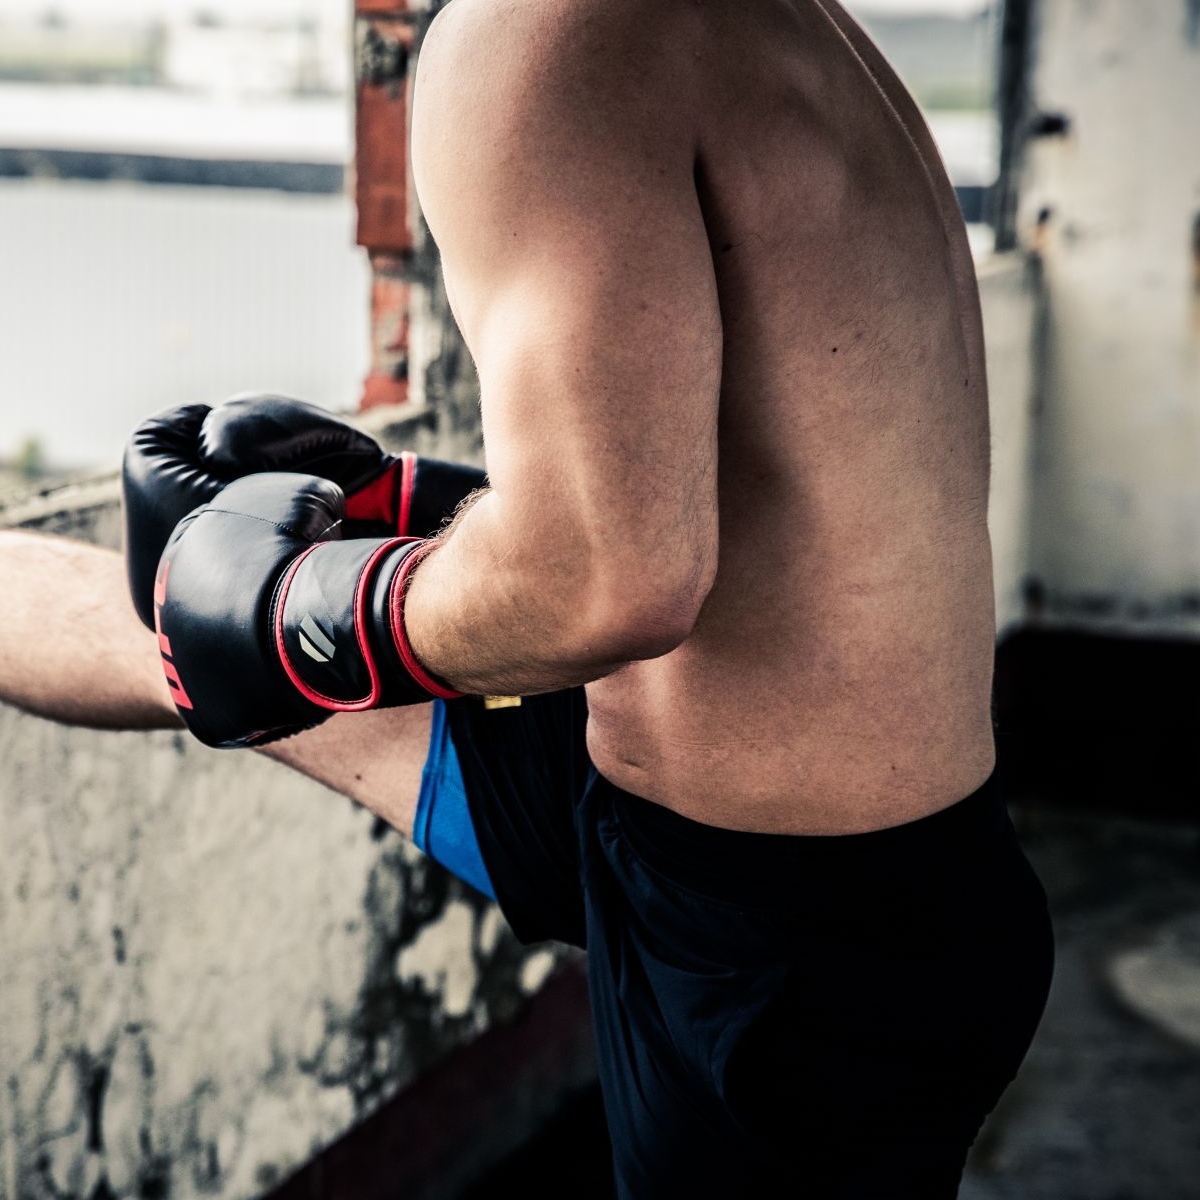 UFC Boxing Training Gloves (Muay Thai Training Gloves) - 12